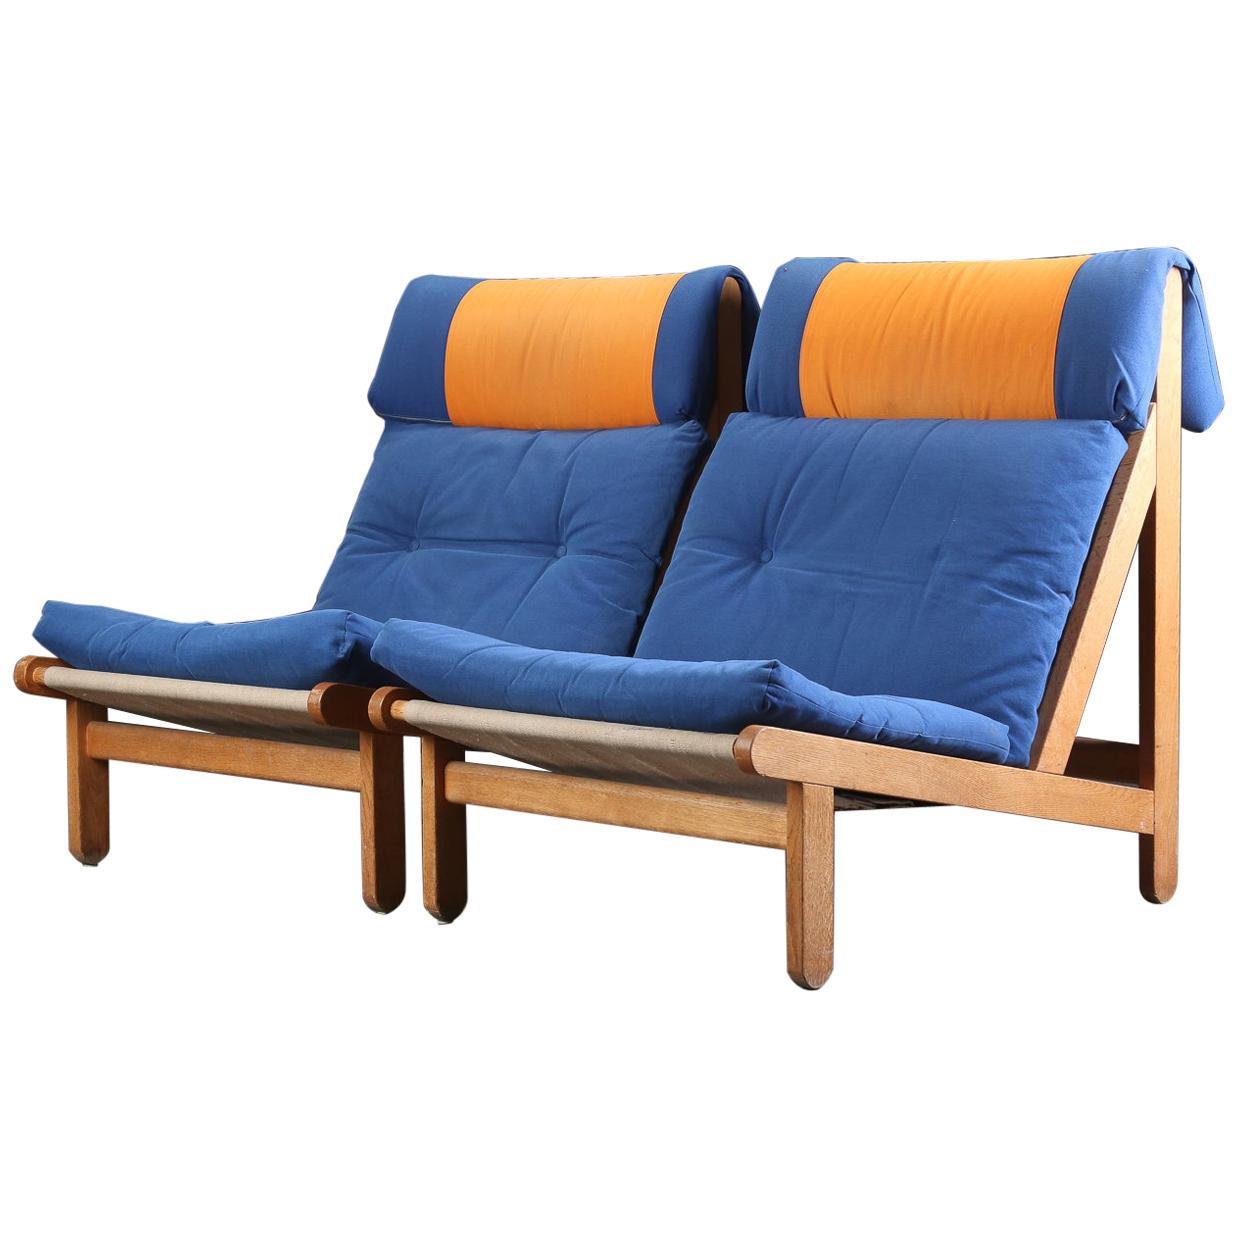 Pair of Lounge Chairs by Bernt Pedersen